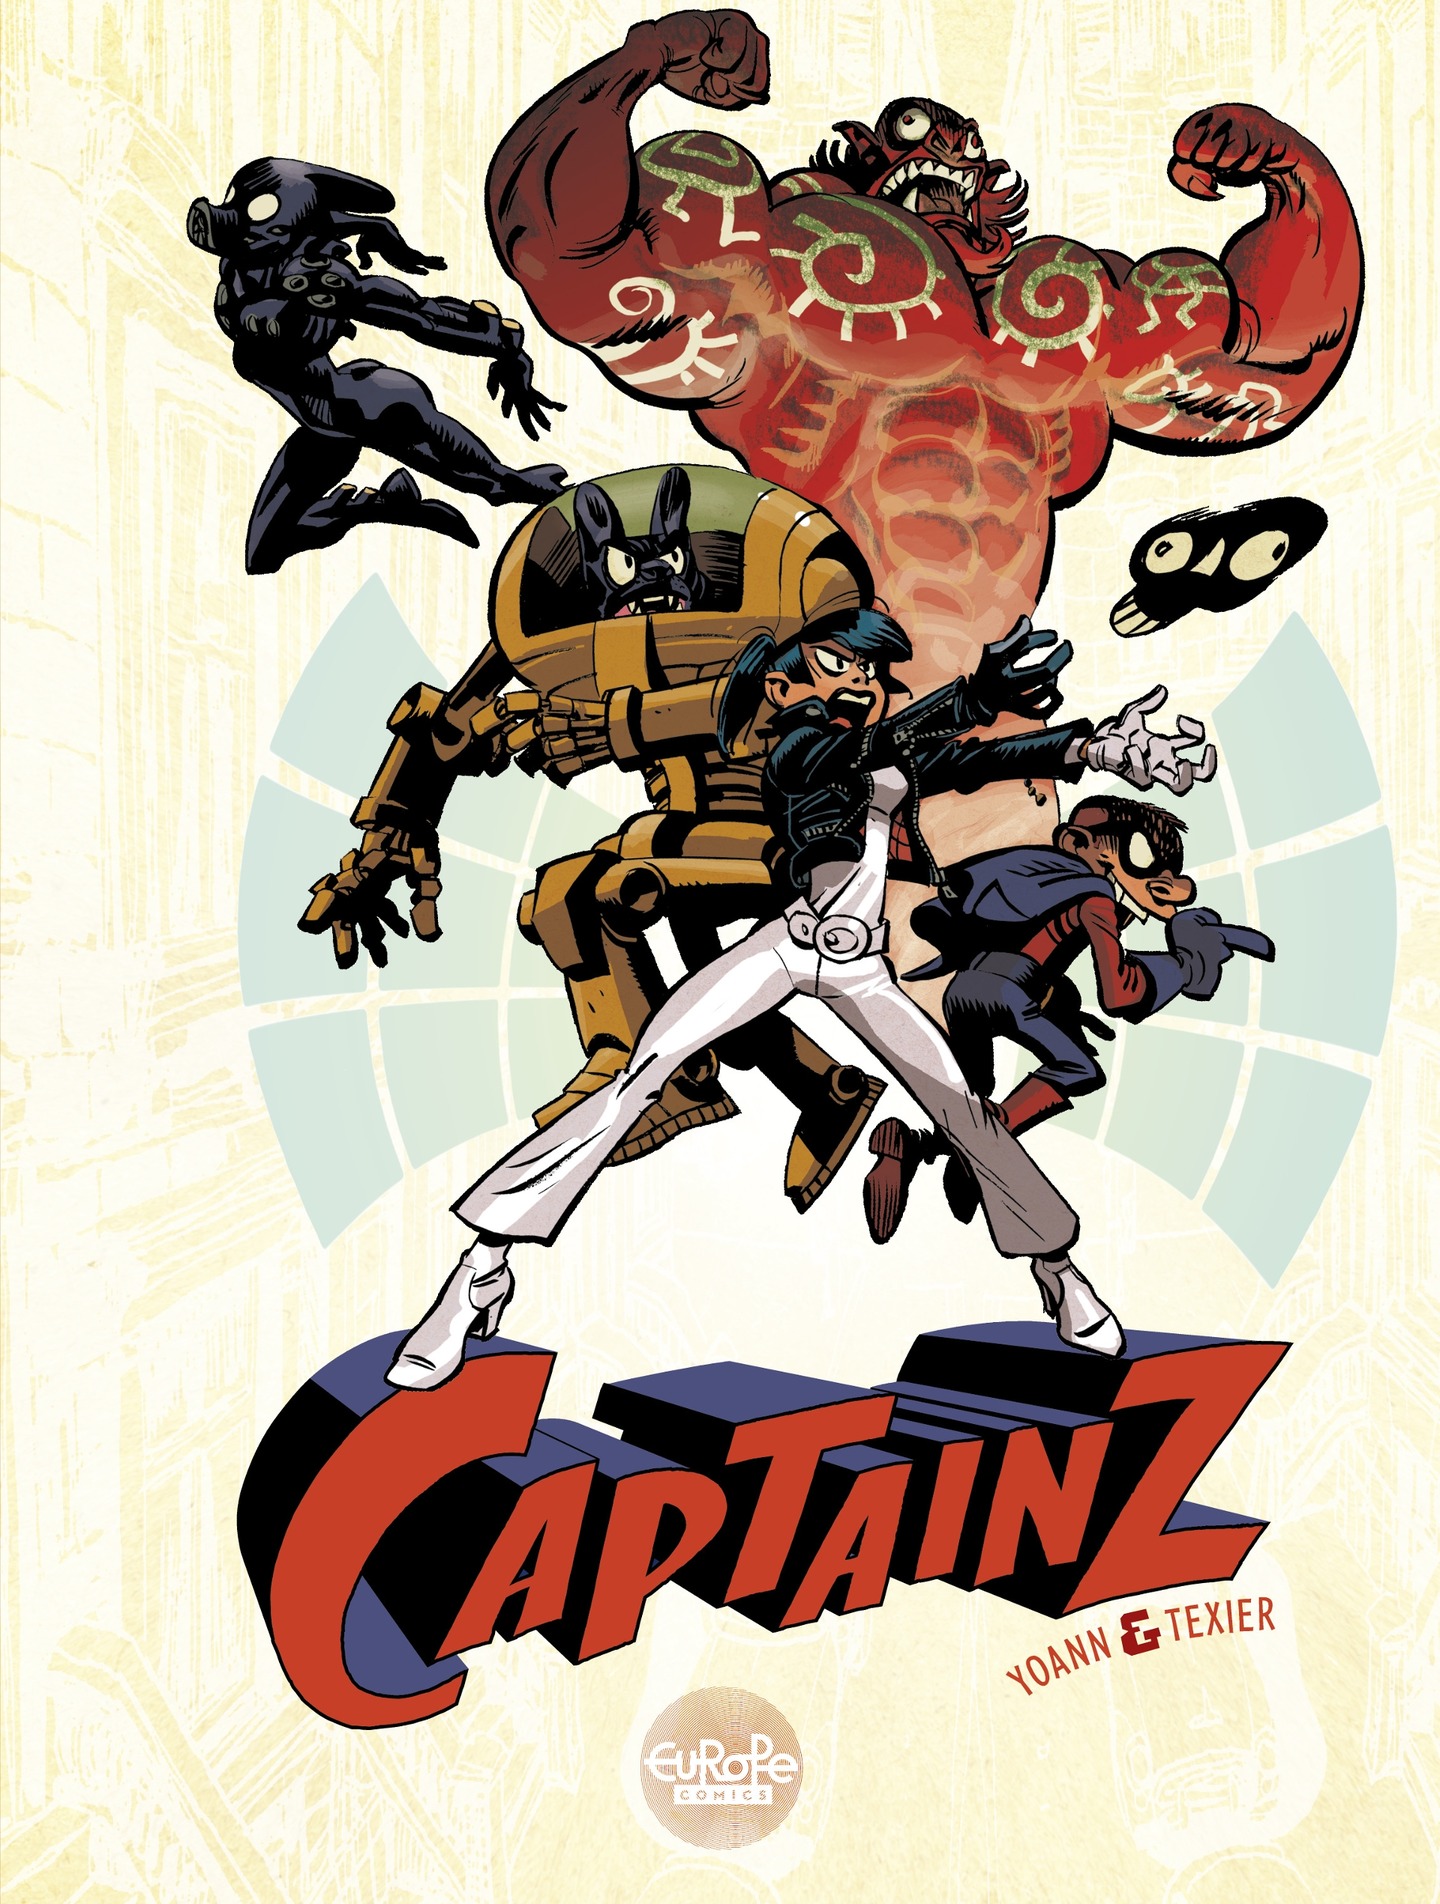 Read online Captainz comic -  Issue # Full - 1